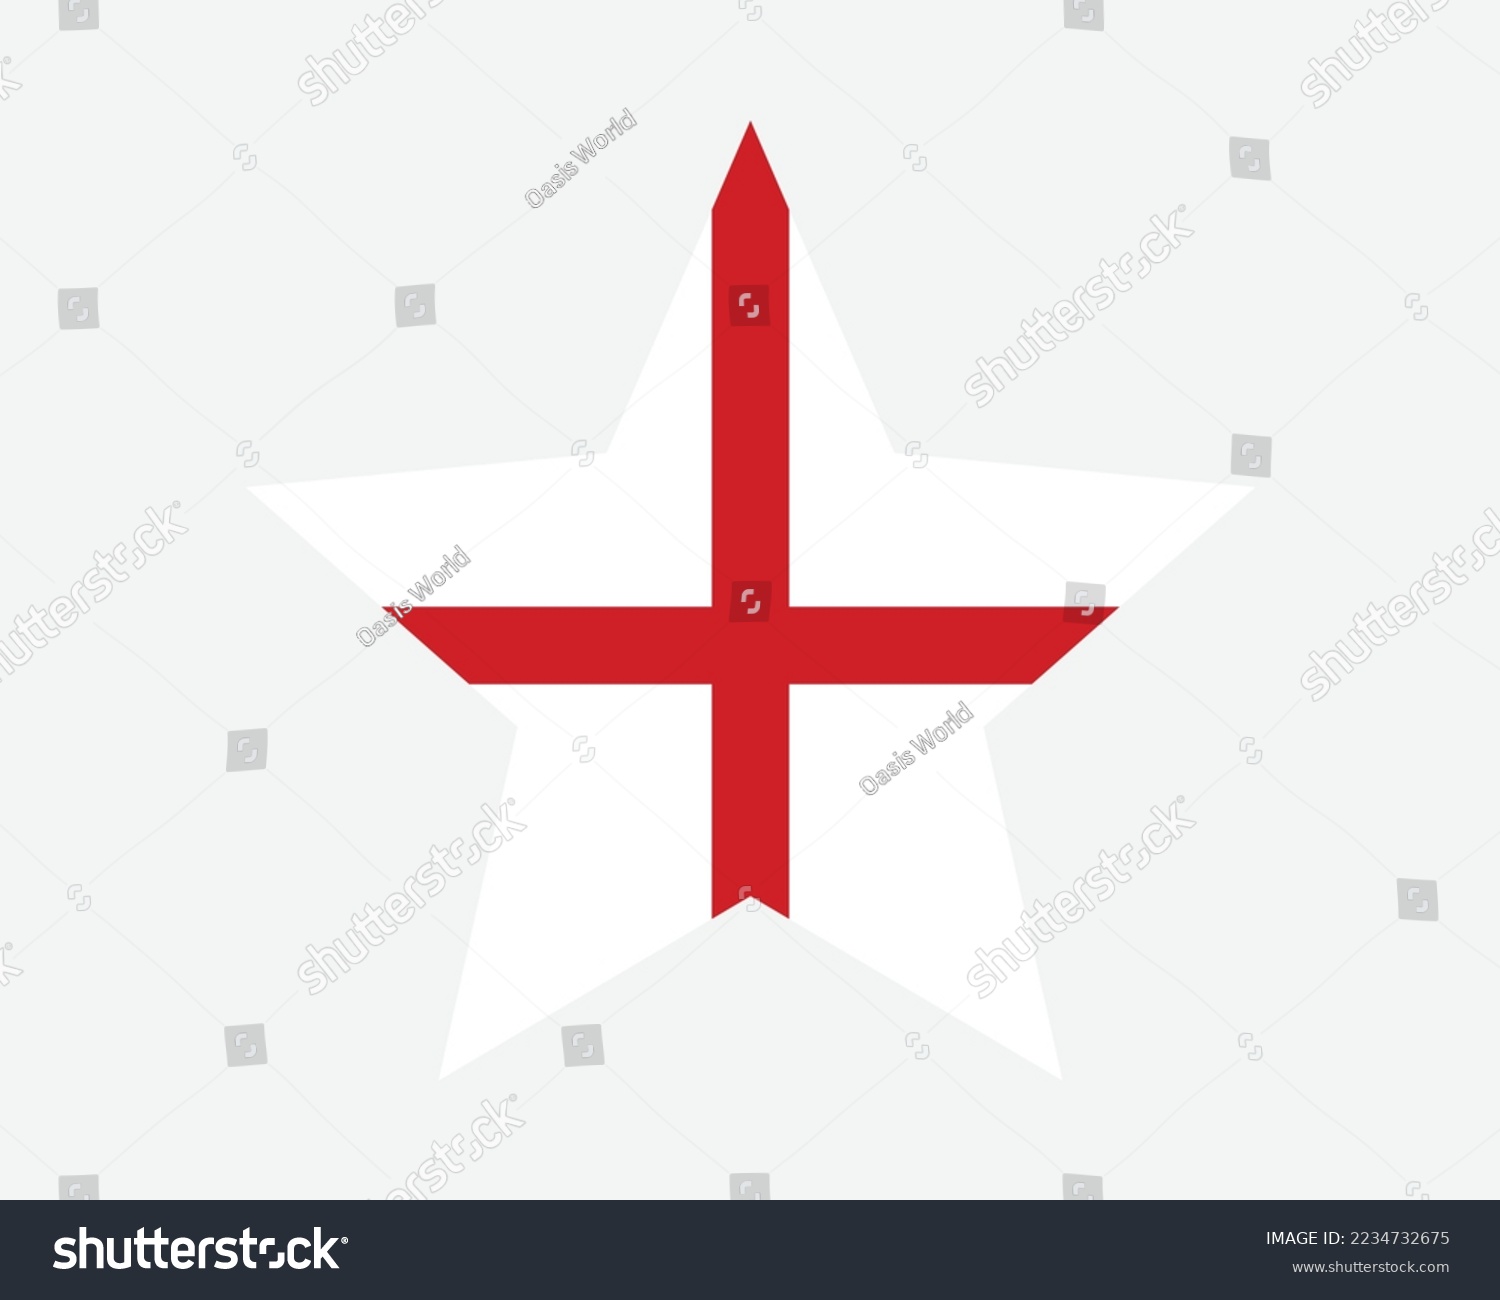 SVG of England Star Flag. English Star Shape Flag. Flag of England Country National Banner Cross Icon Symbol Vector Flat Artwork Graphic Illustration svg